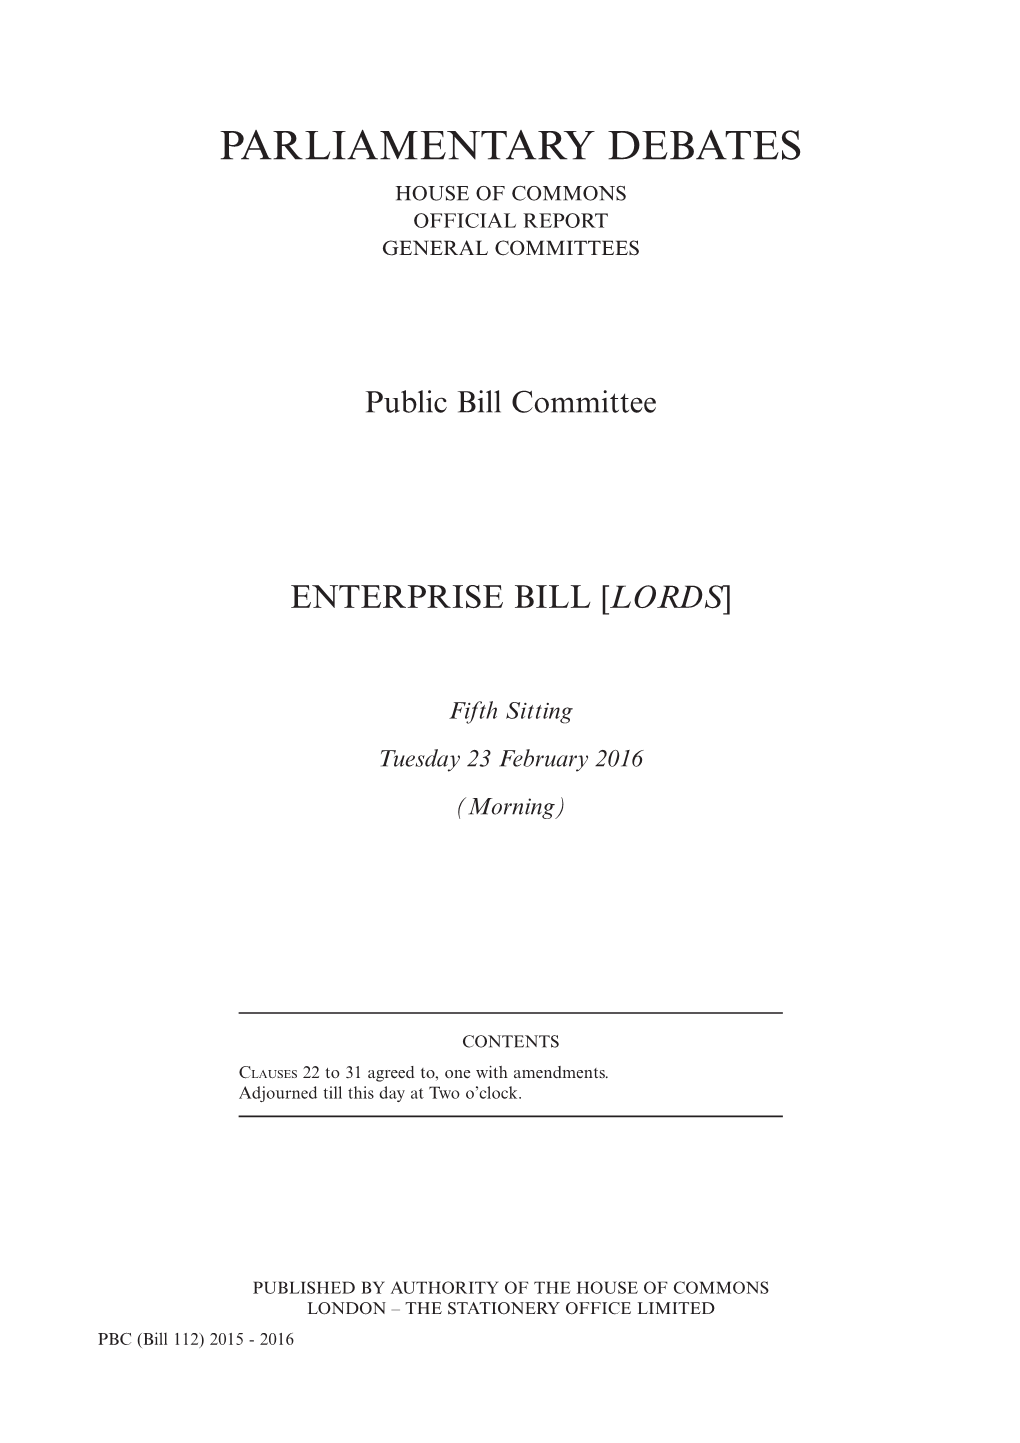 Enterprise Bill [Lords]